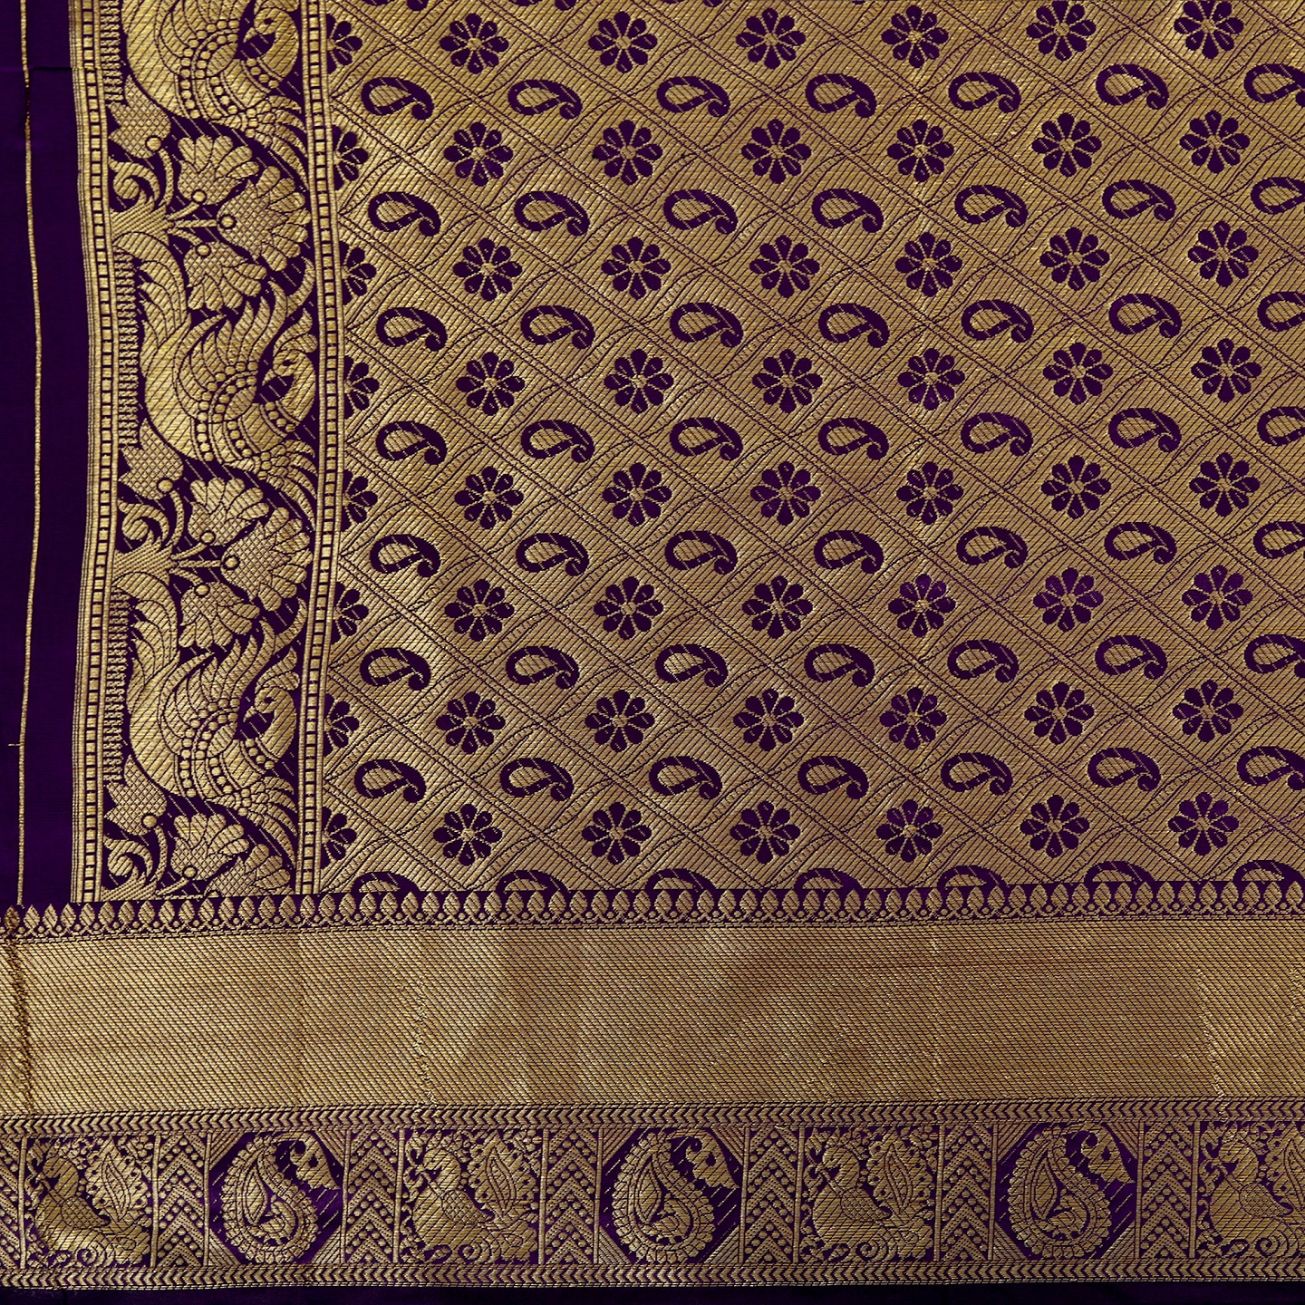 purple Color Pure Kanjivaram Silk Saree With Gold Zari Weaving Work  And Rich Pallu